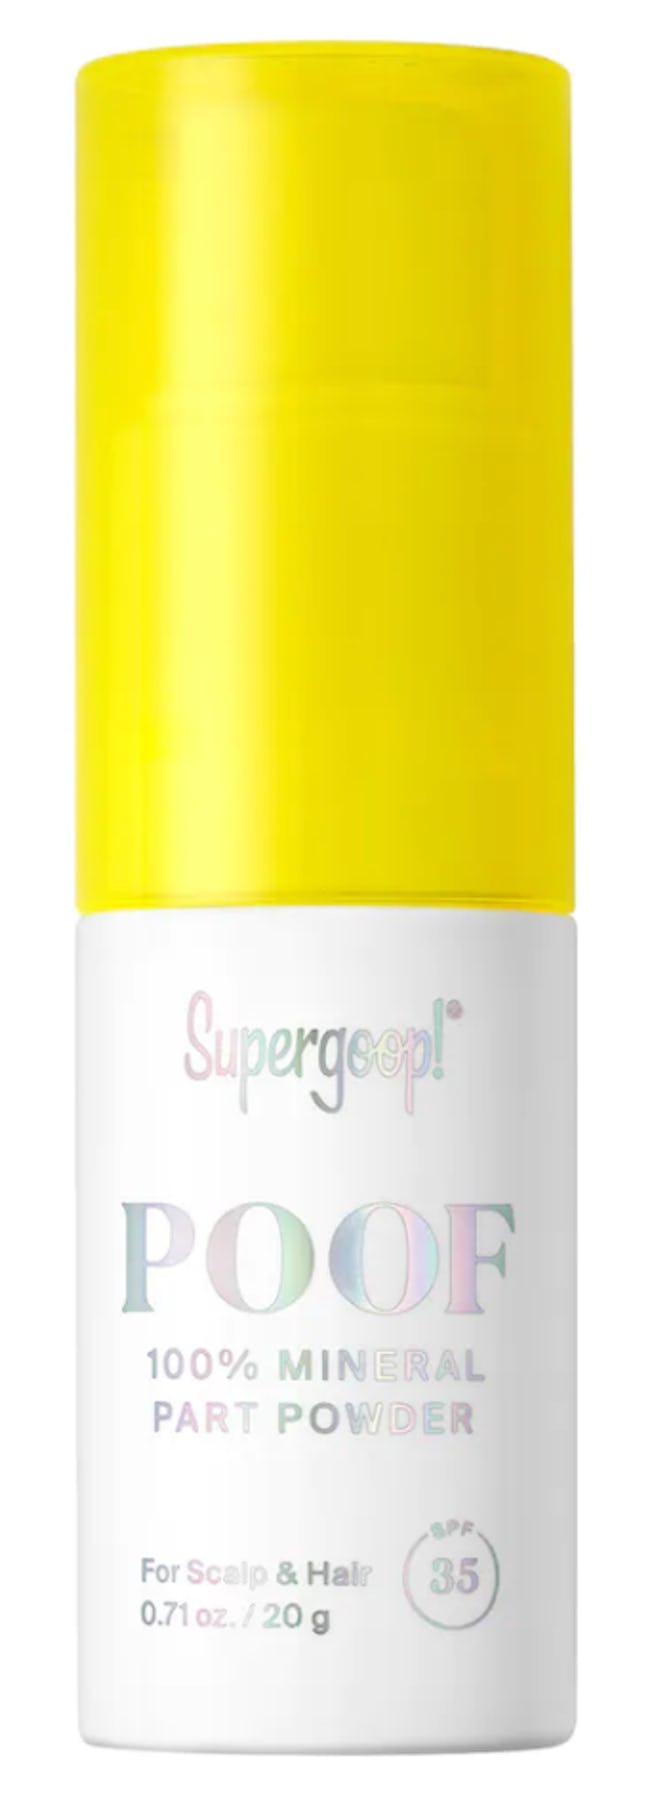 Supergoop! Poof 100% Mineral Part Powder SPF 35